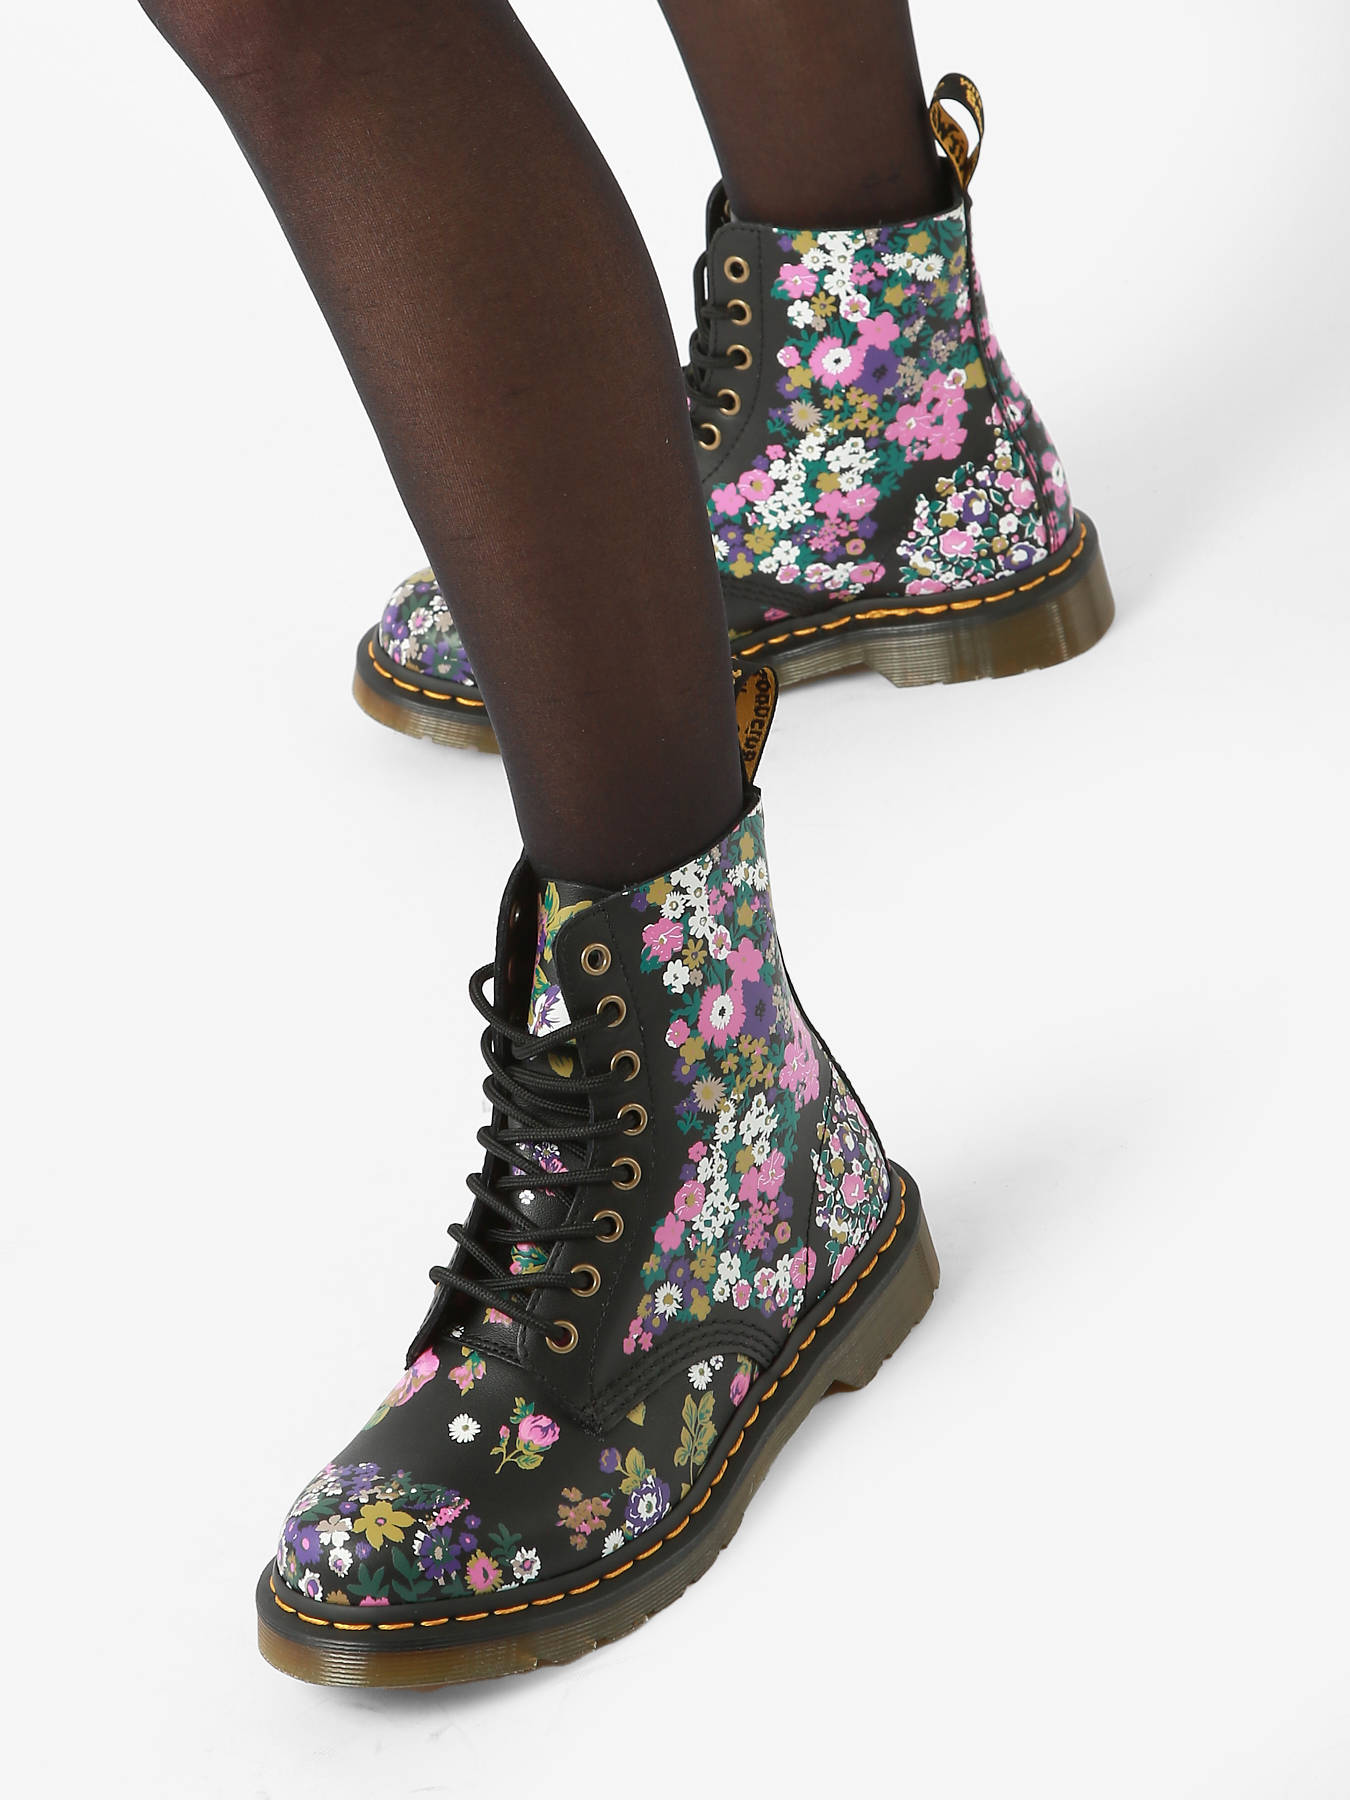 Boots/bottines Dr Martens 1460 PASCAL FLORAL multi vintage floral